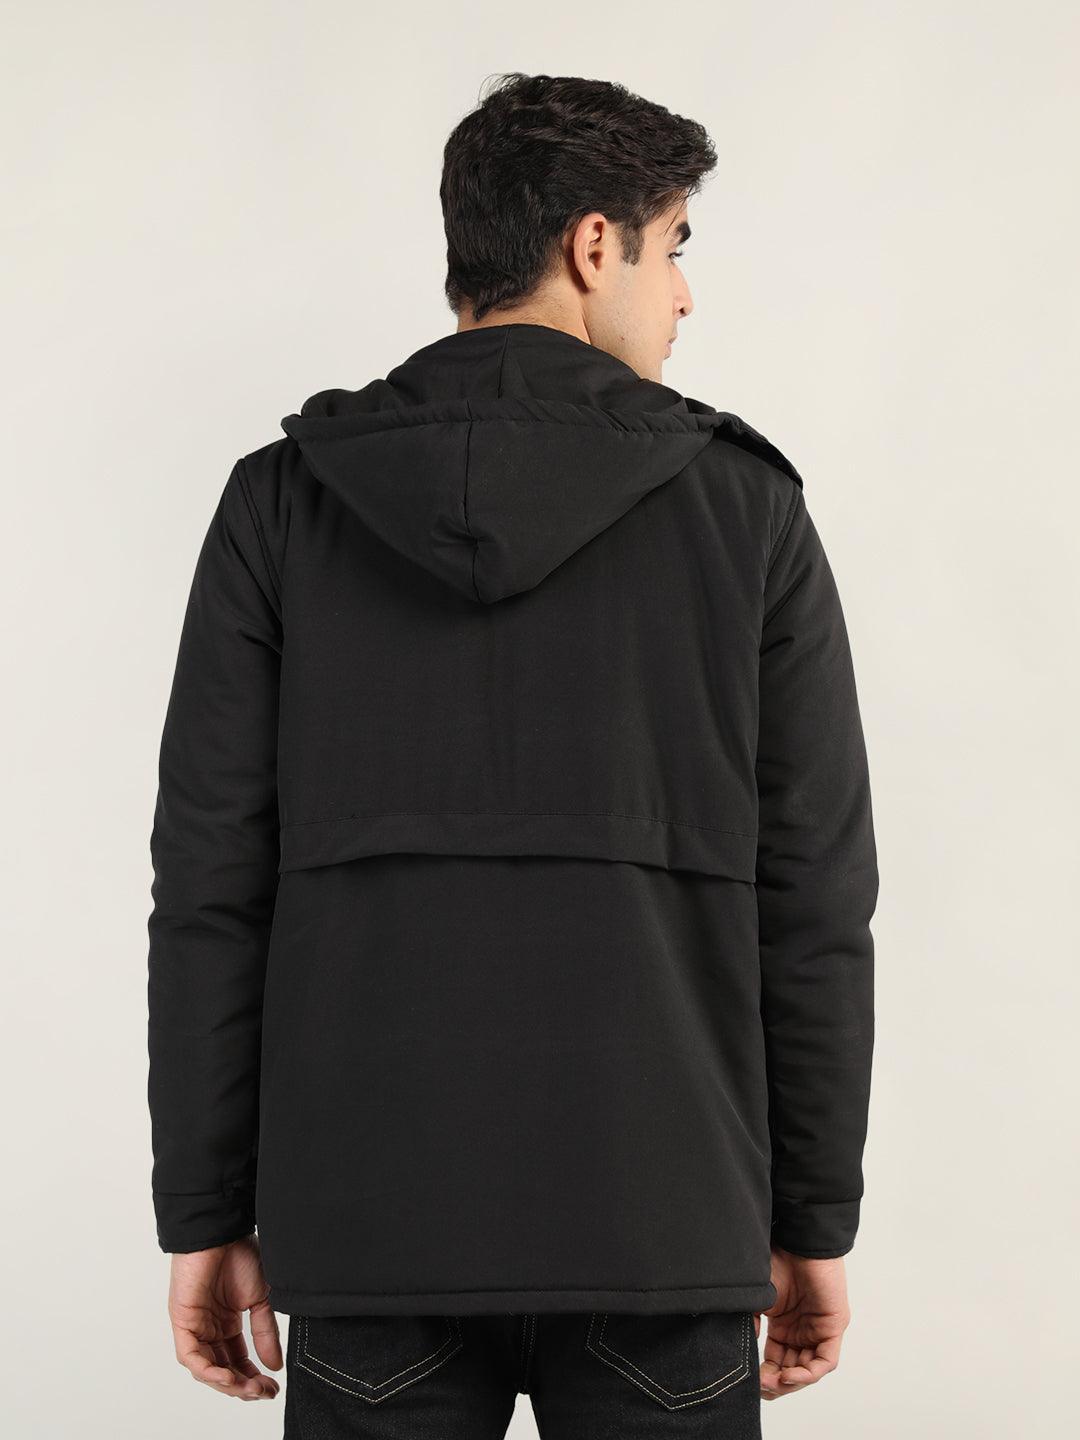 Men Hooded Outdoor Stylish Jackets | CHKOKKO - Chkokko